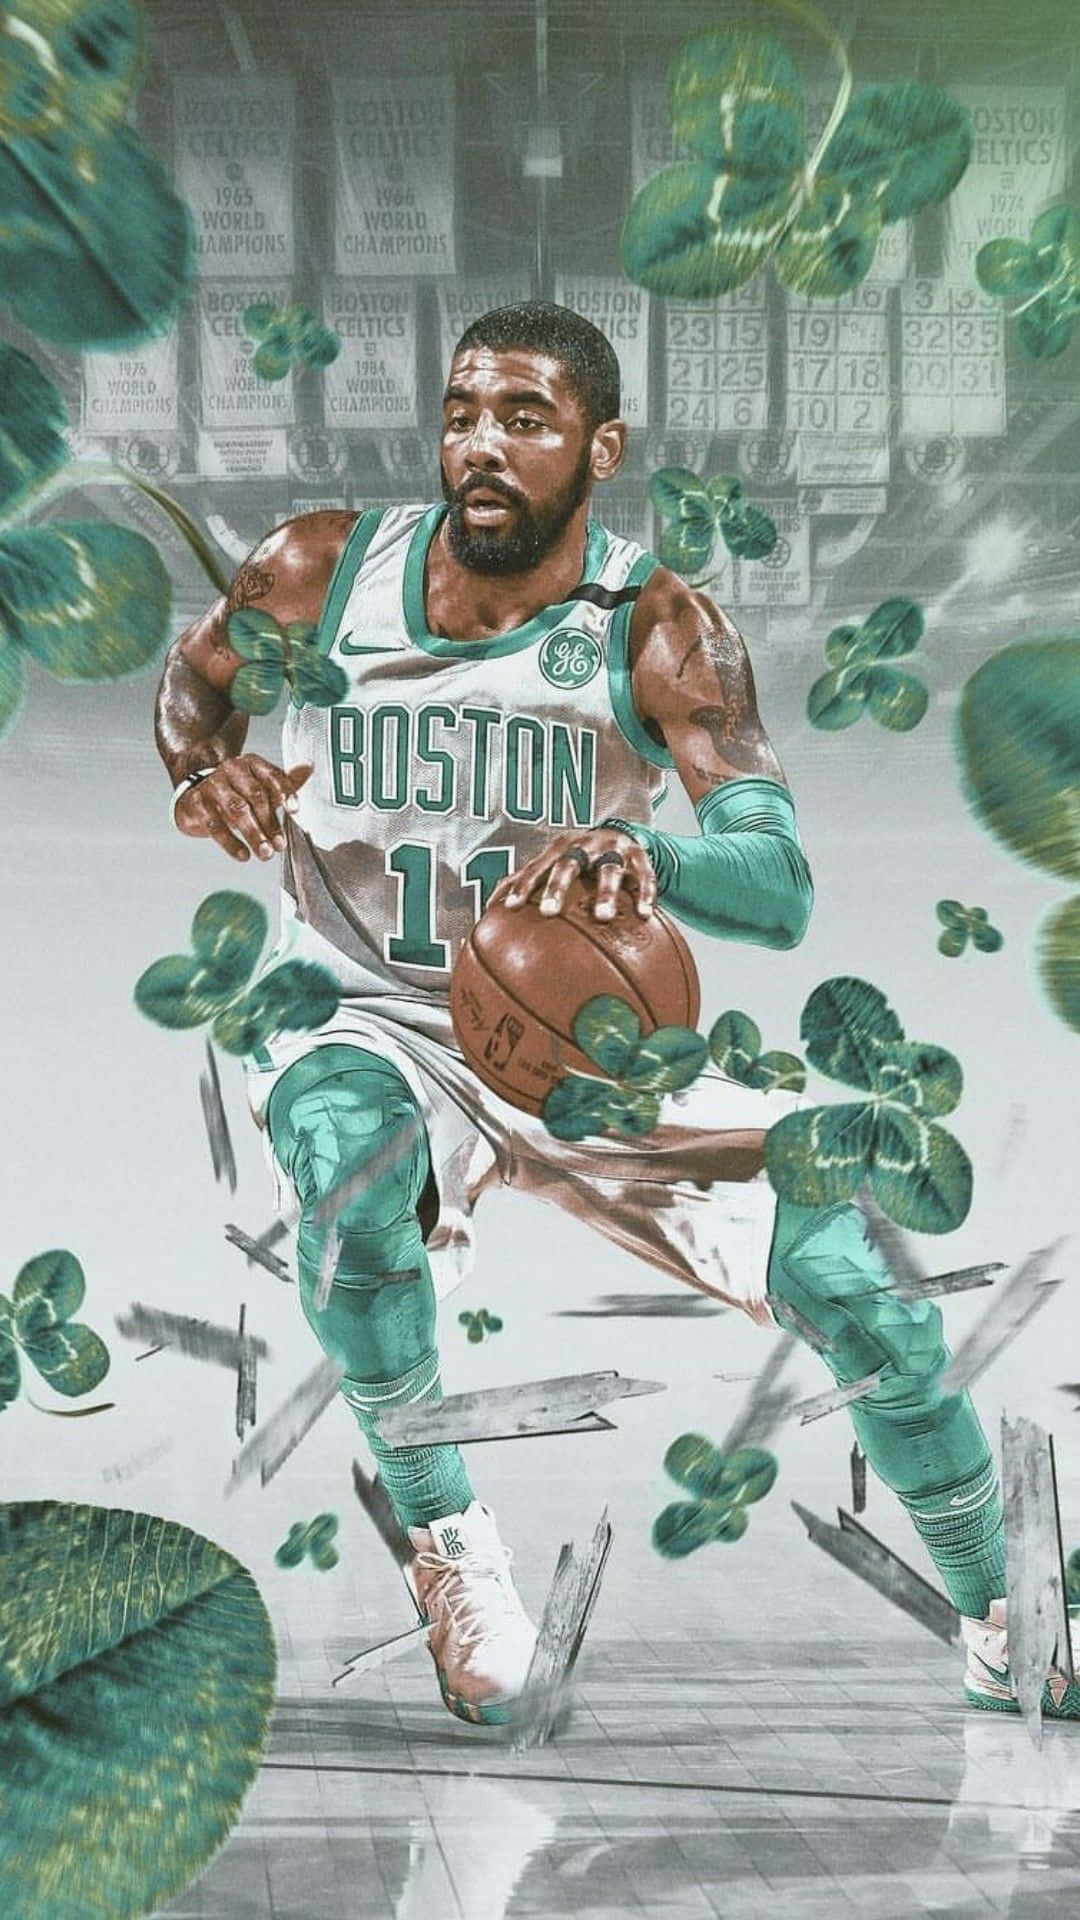 Papelde Parede Do Trevo Dos Boston Celtics. Papel de Parede